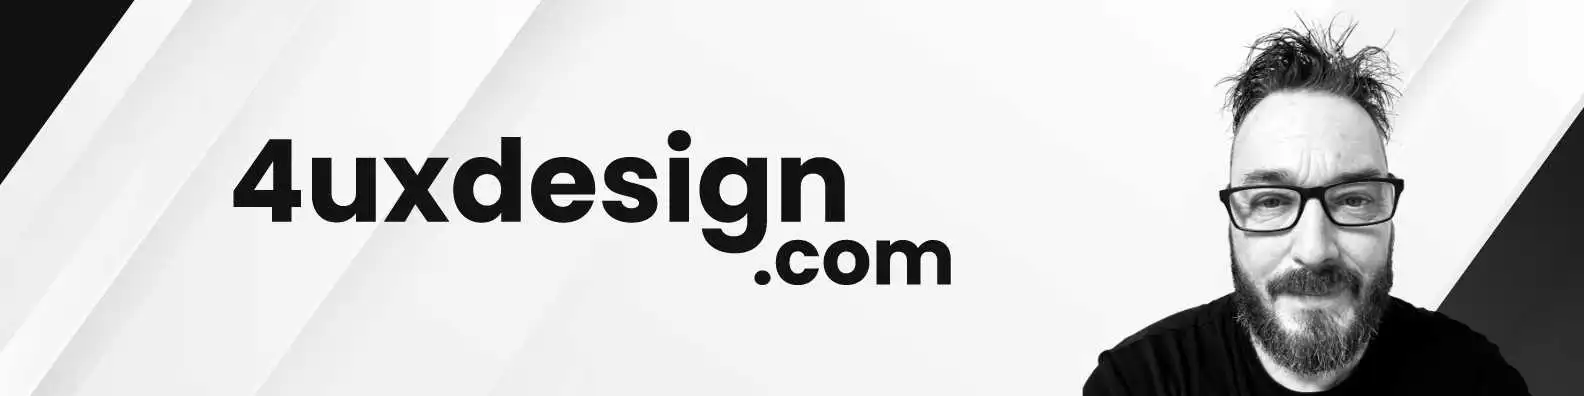 4uxdesign.com banner image